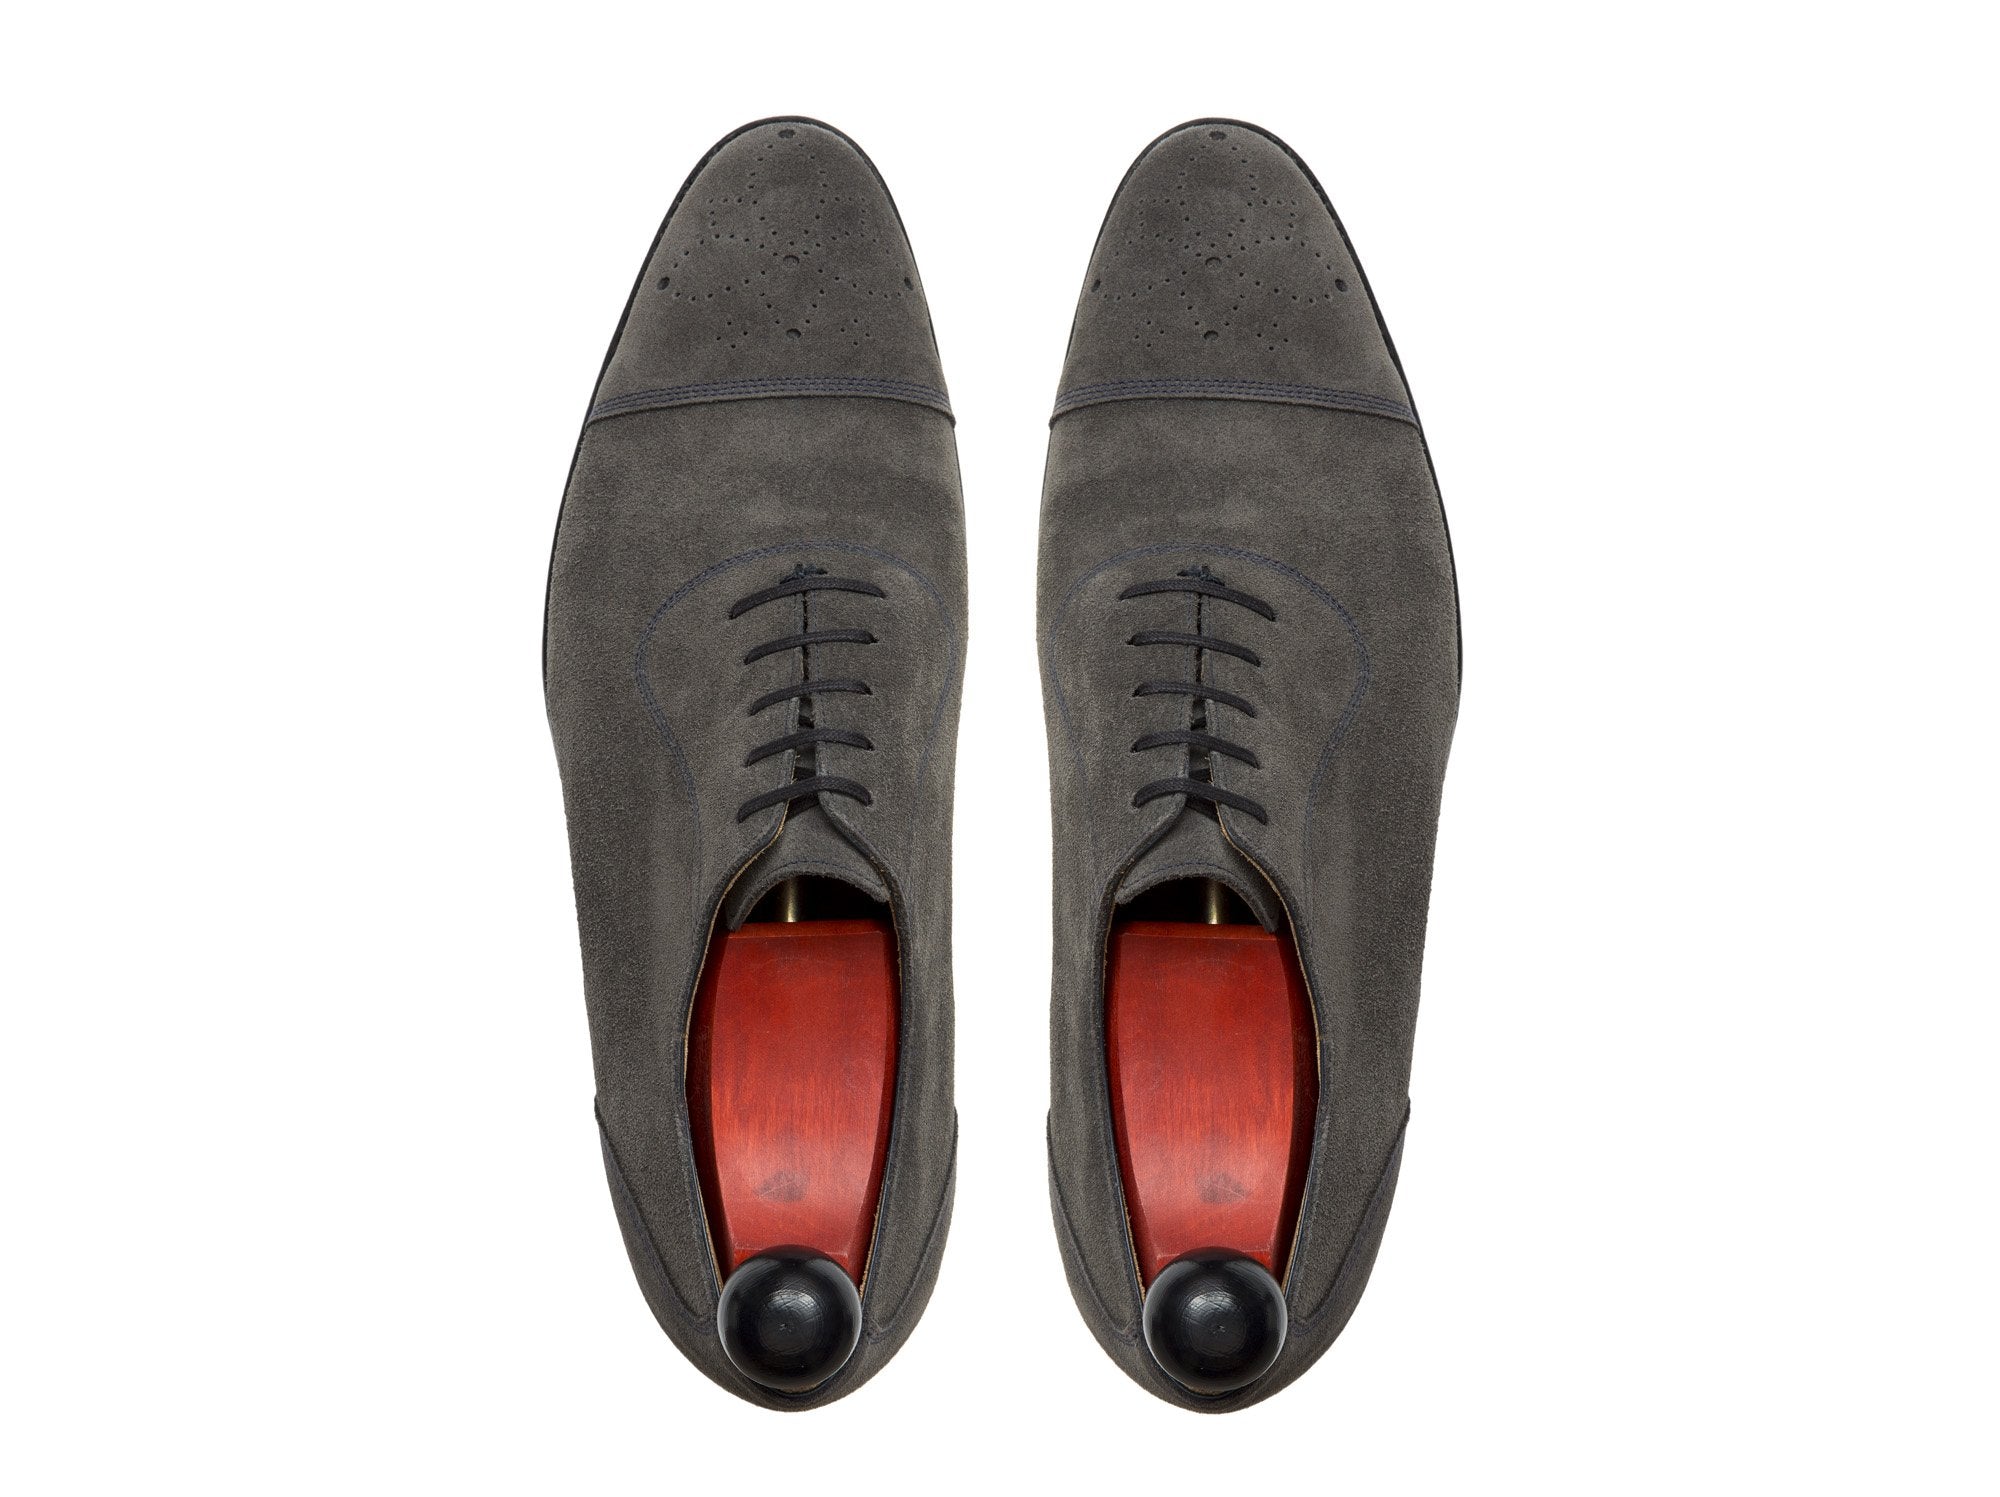 J.FitzPatrick Footwear - Auburn - Mid Grey Suede / Navy Stitching - NGT Last